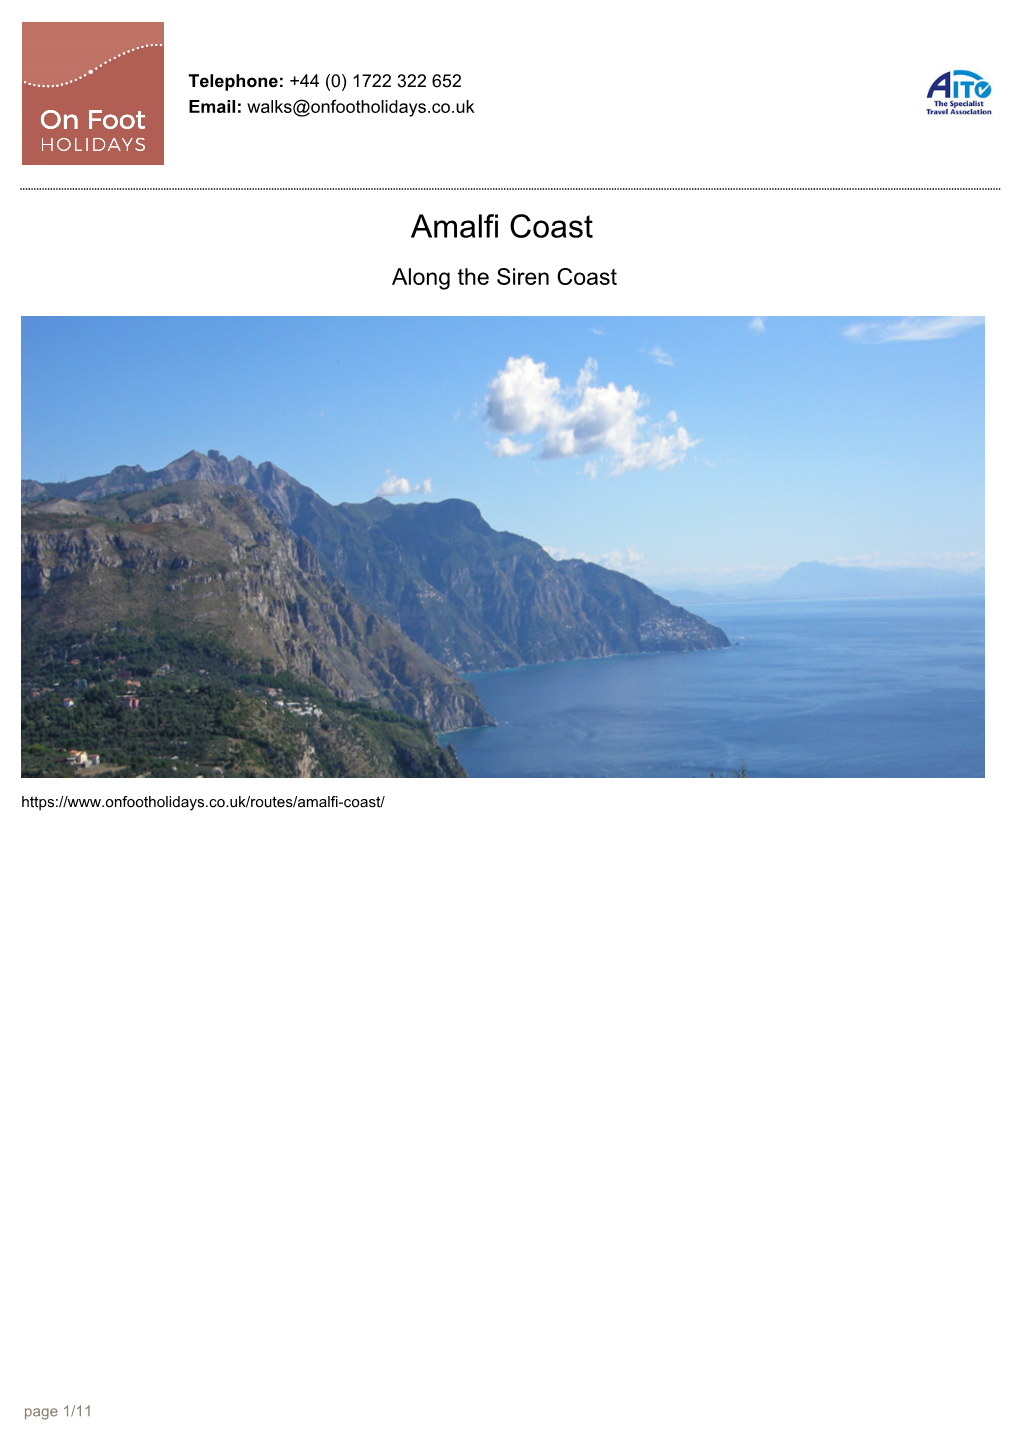 Amalfi Coast Along the Siren Coast